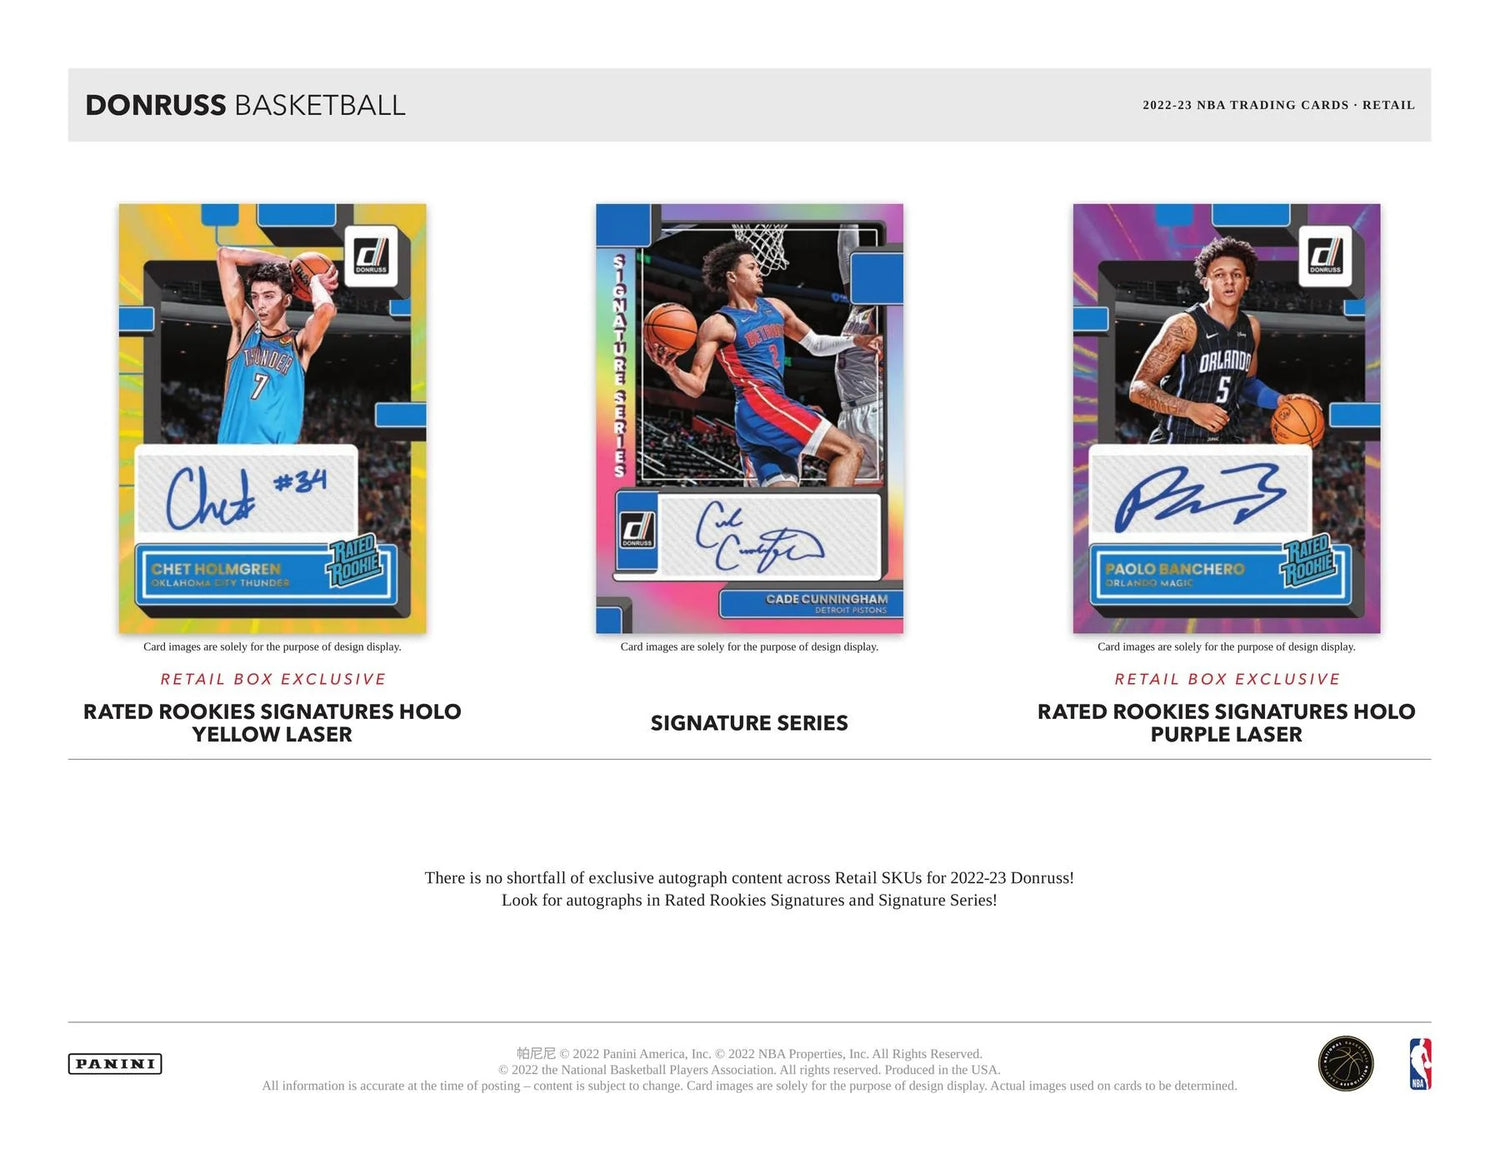 Panini Donruss Basketball Retail Booster Pack 2022/23 Signature Series